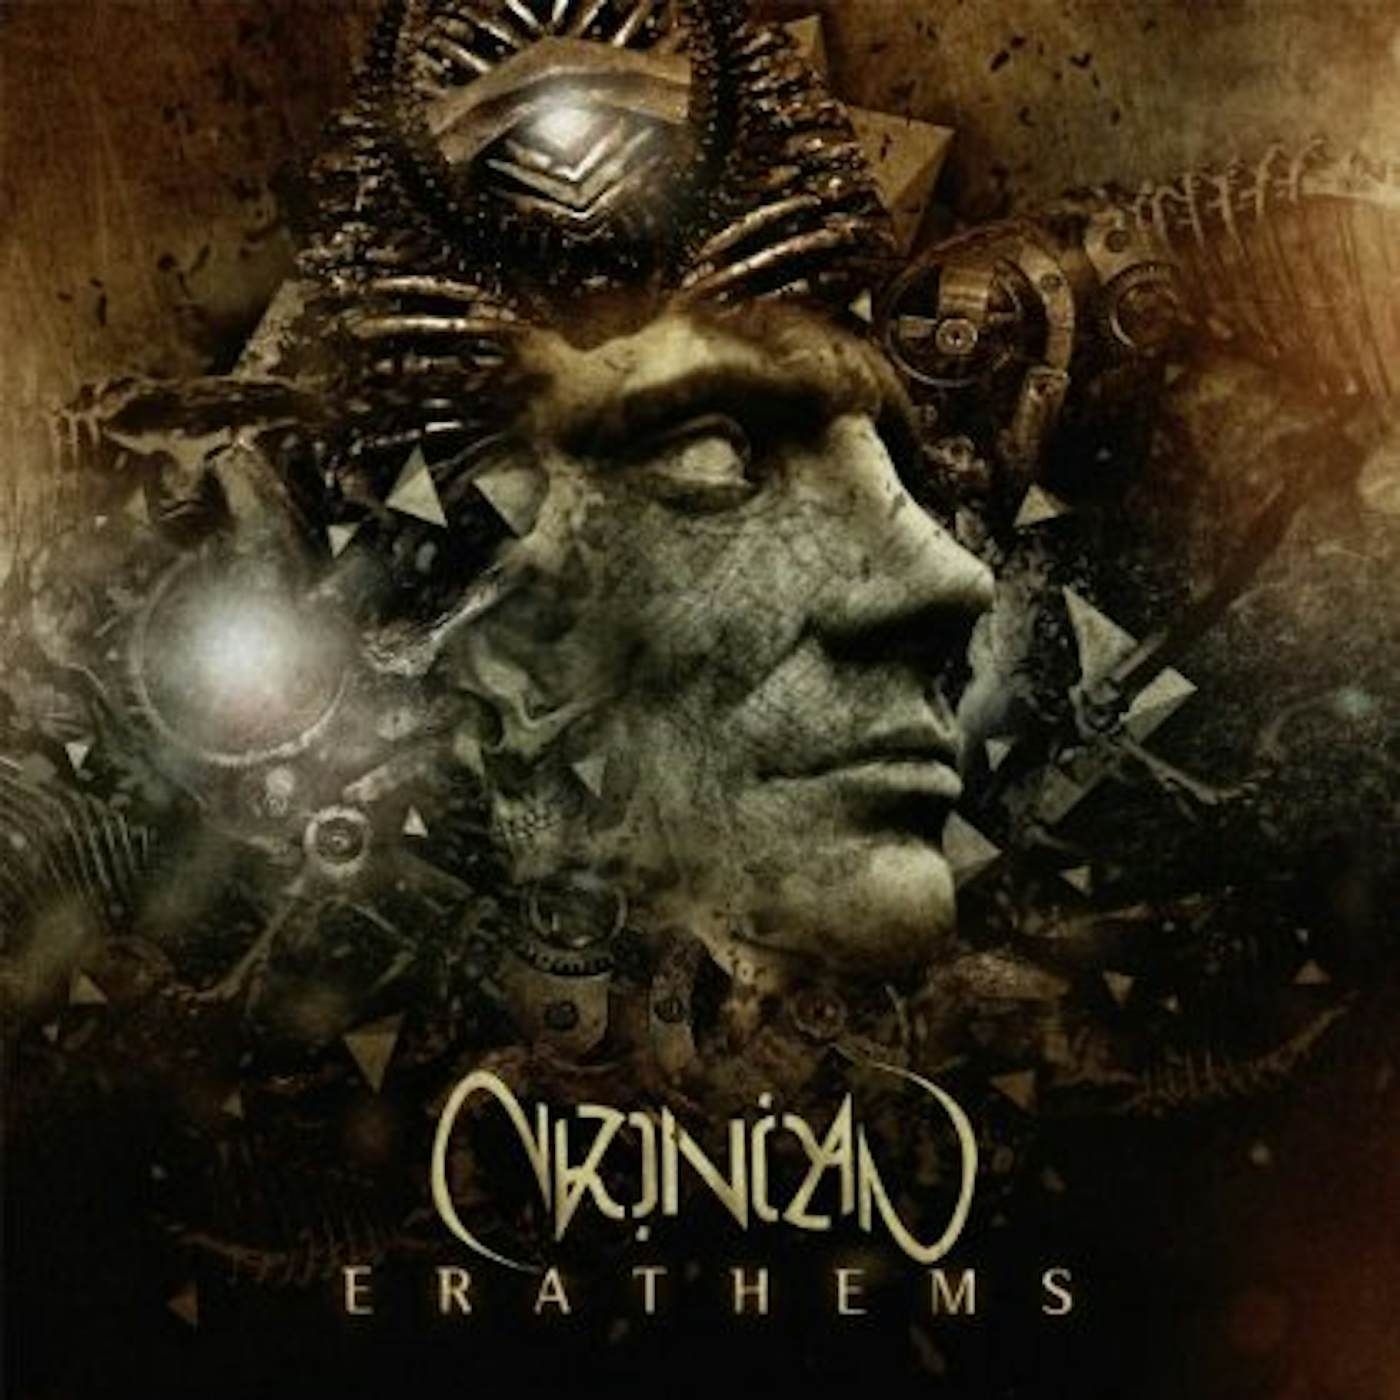 Cronian ERATHEM CD